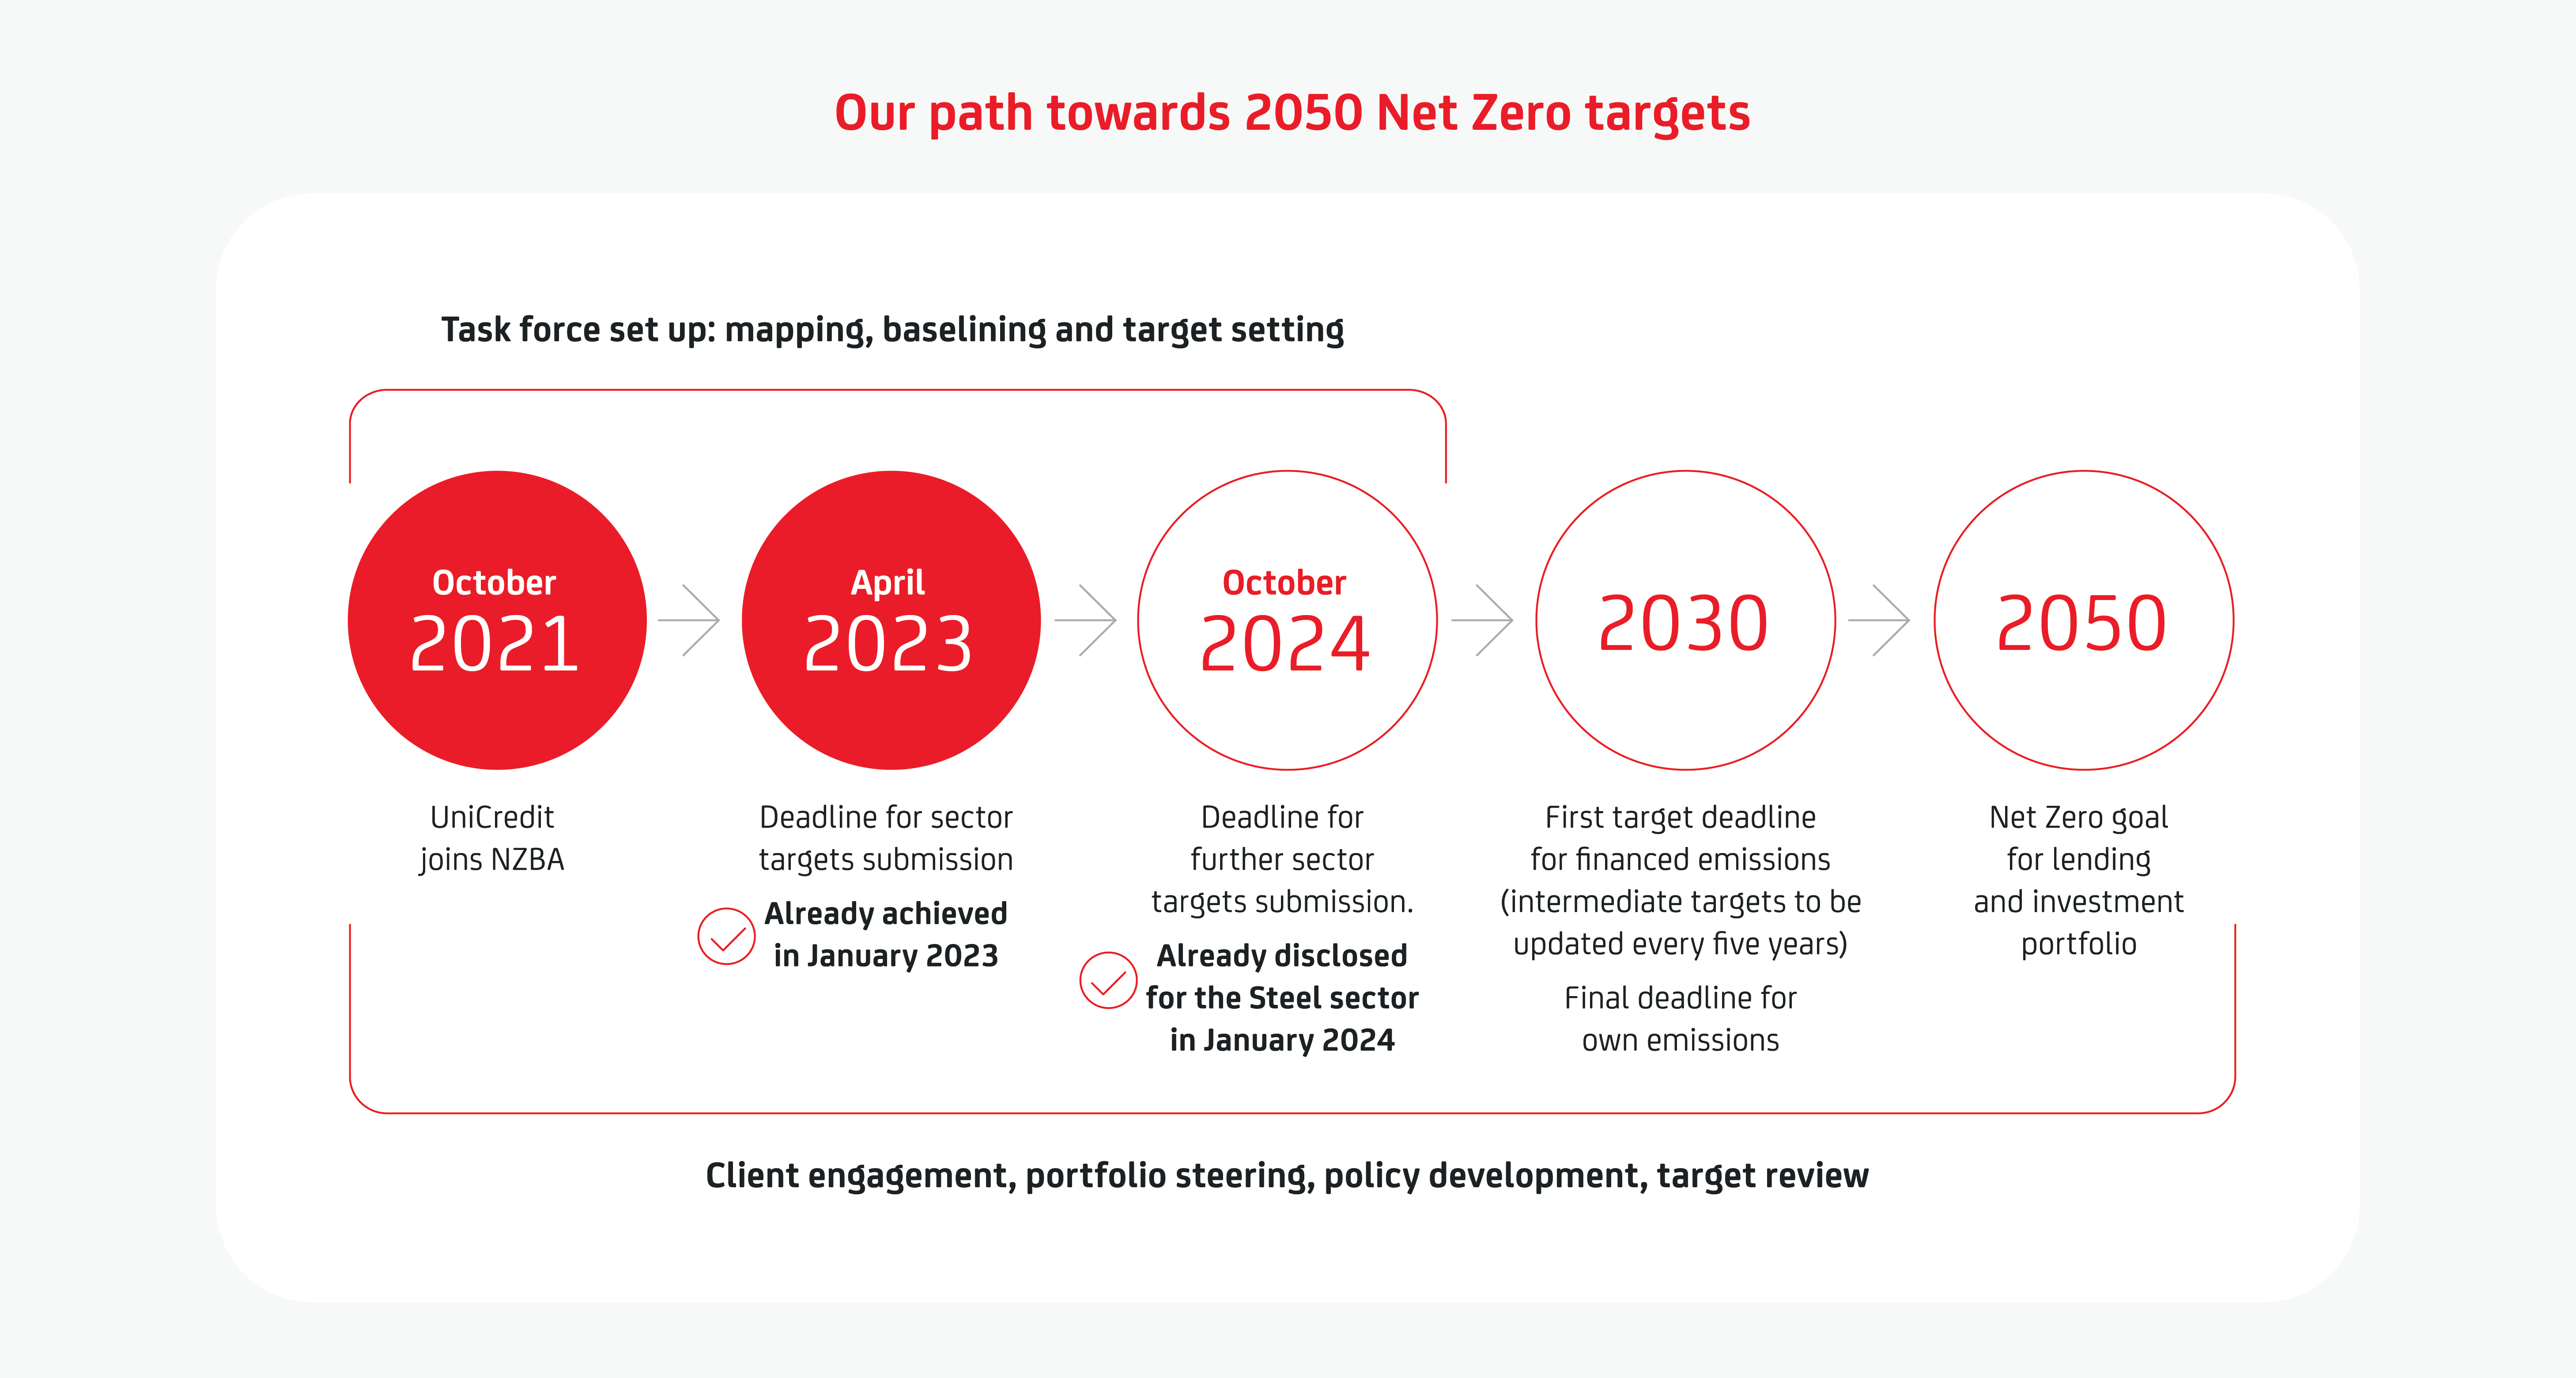 Illustration showing path towards net zero targets